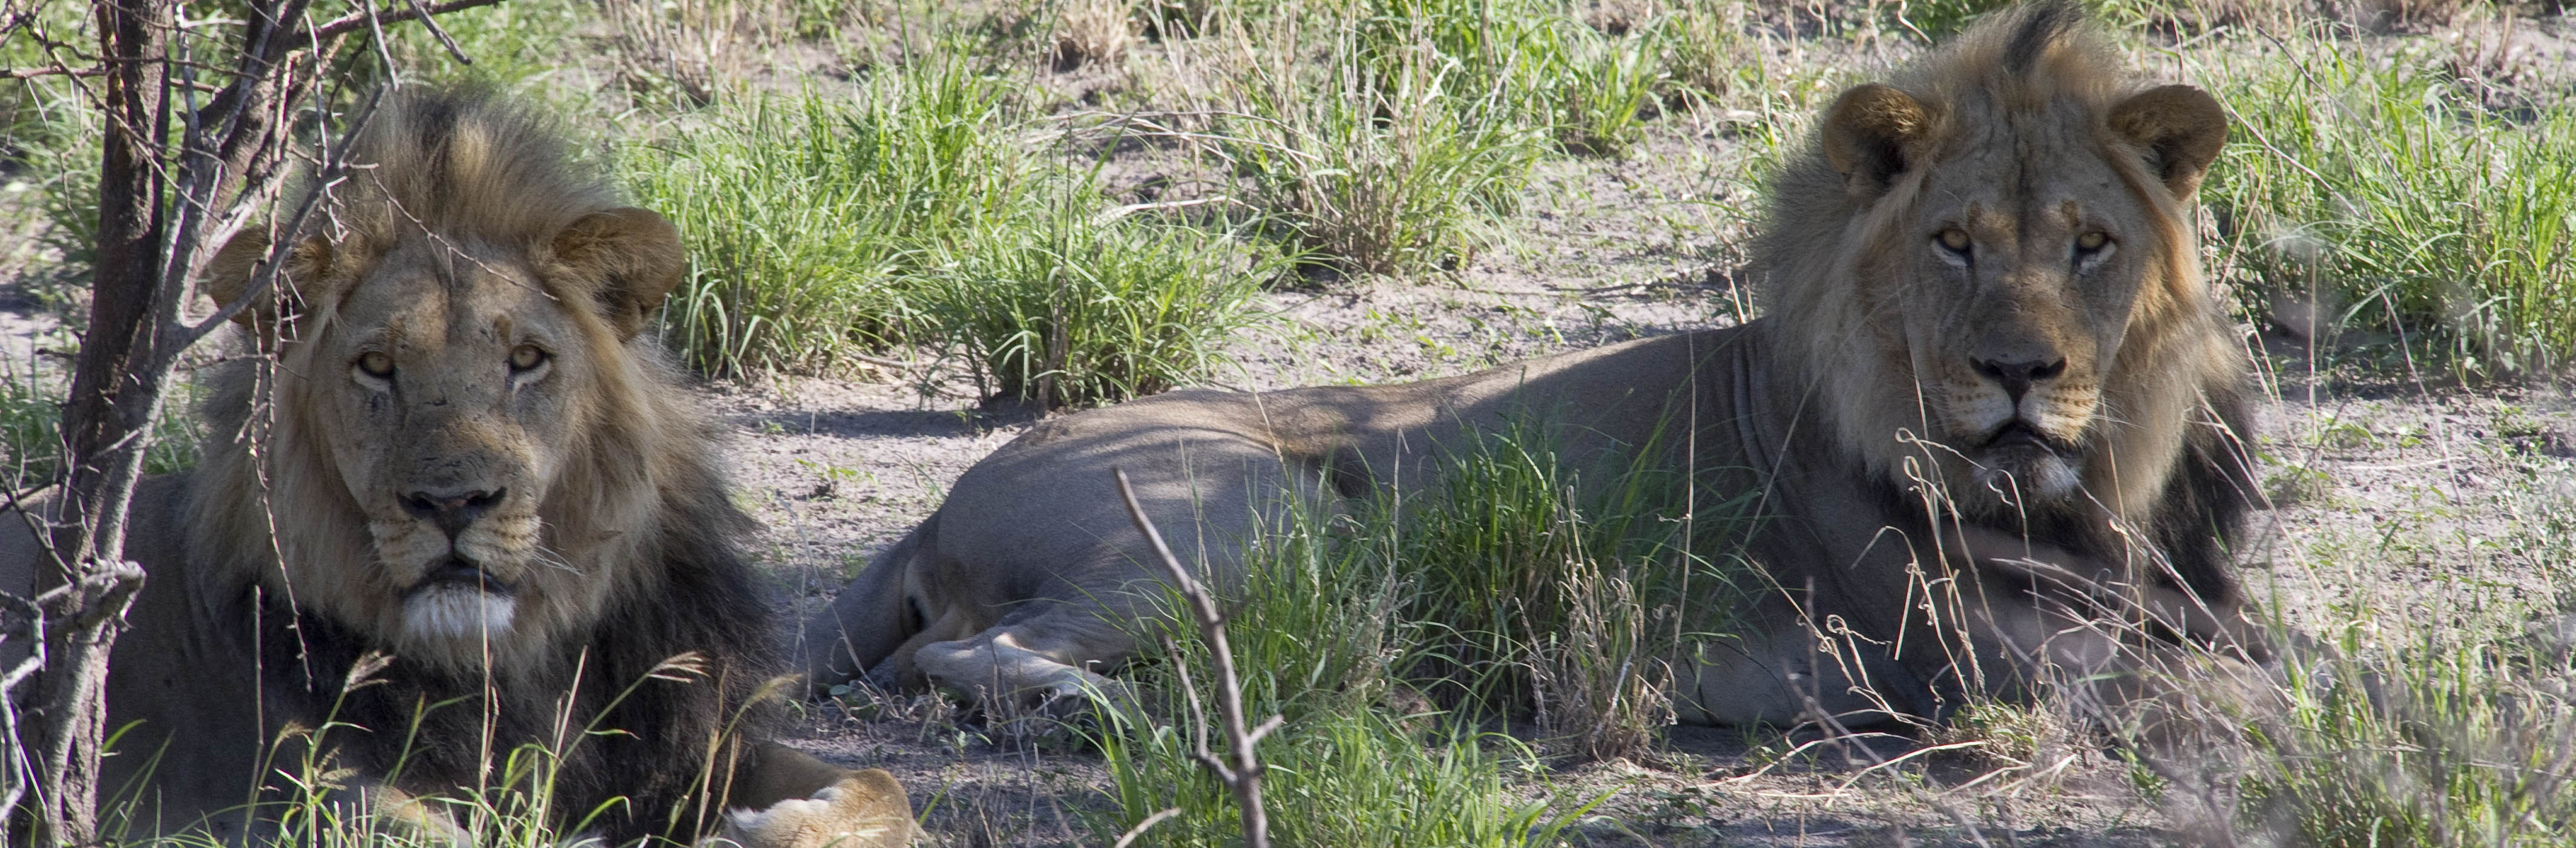 Lions in Central Kalahari Game Reserve | J. Goetz